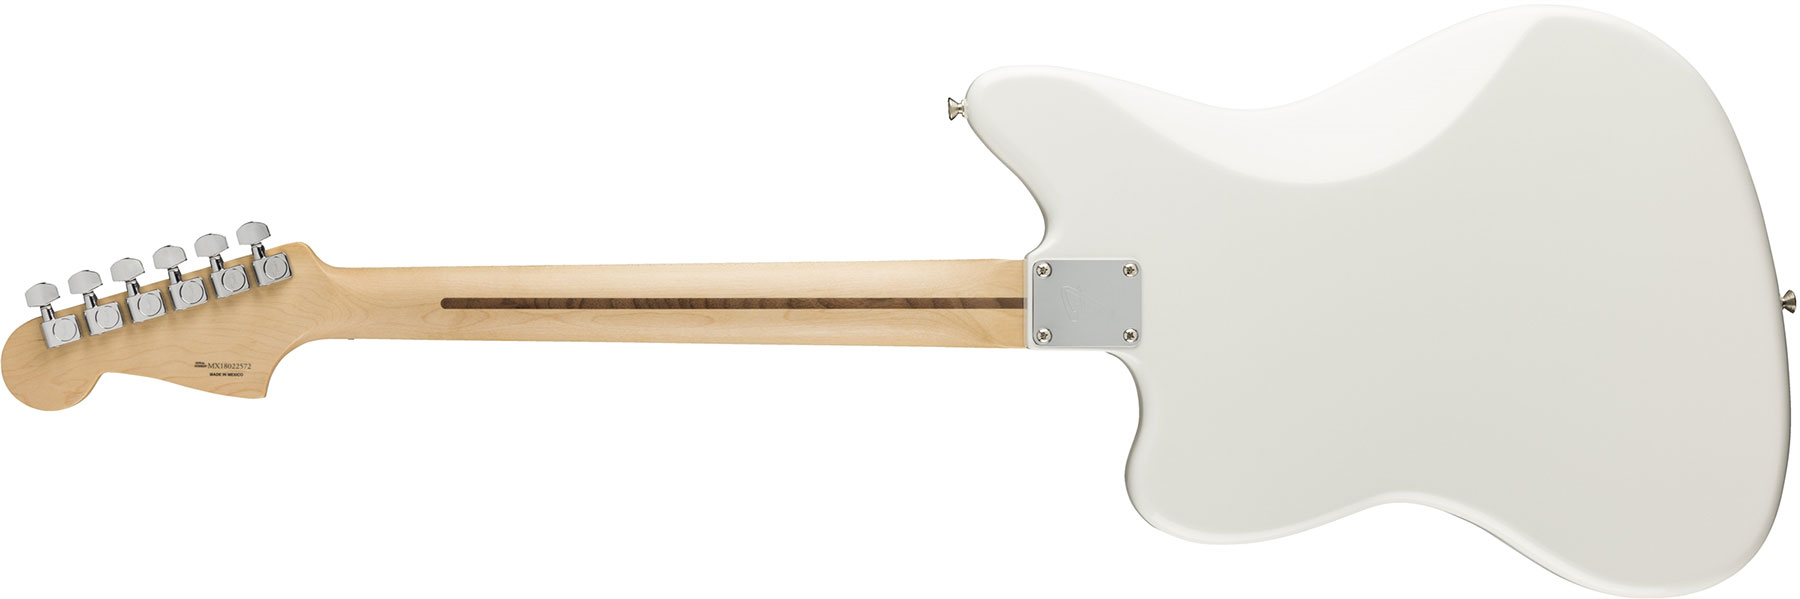 Fender Jazzmaster Player Mex Hh Pf - Polar White - Retro rock electric guitar - Variation 1